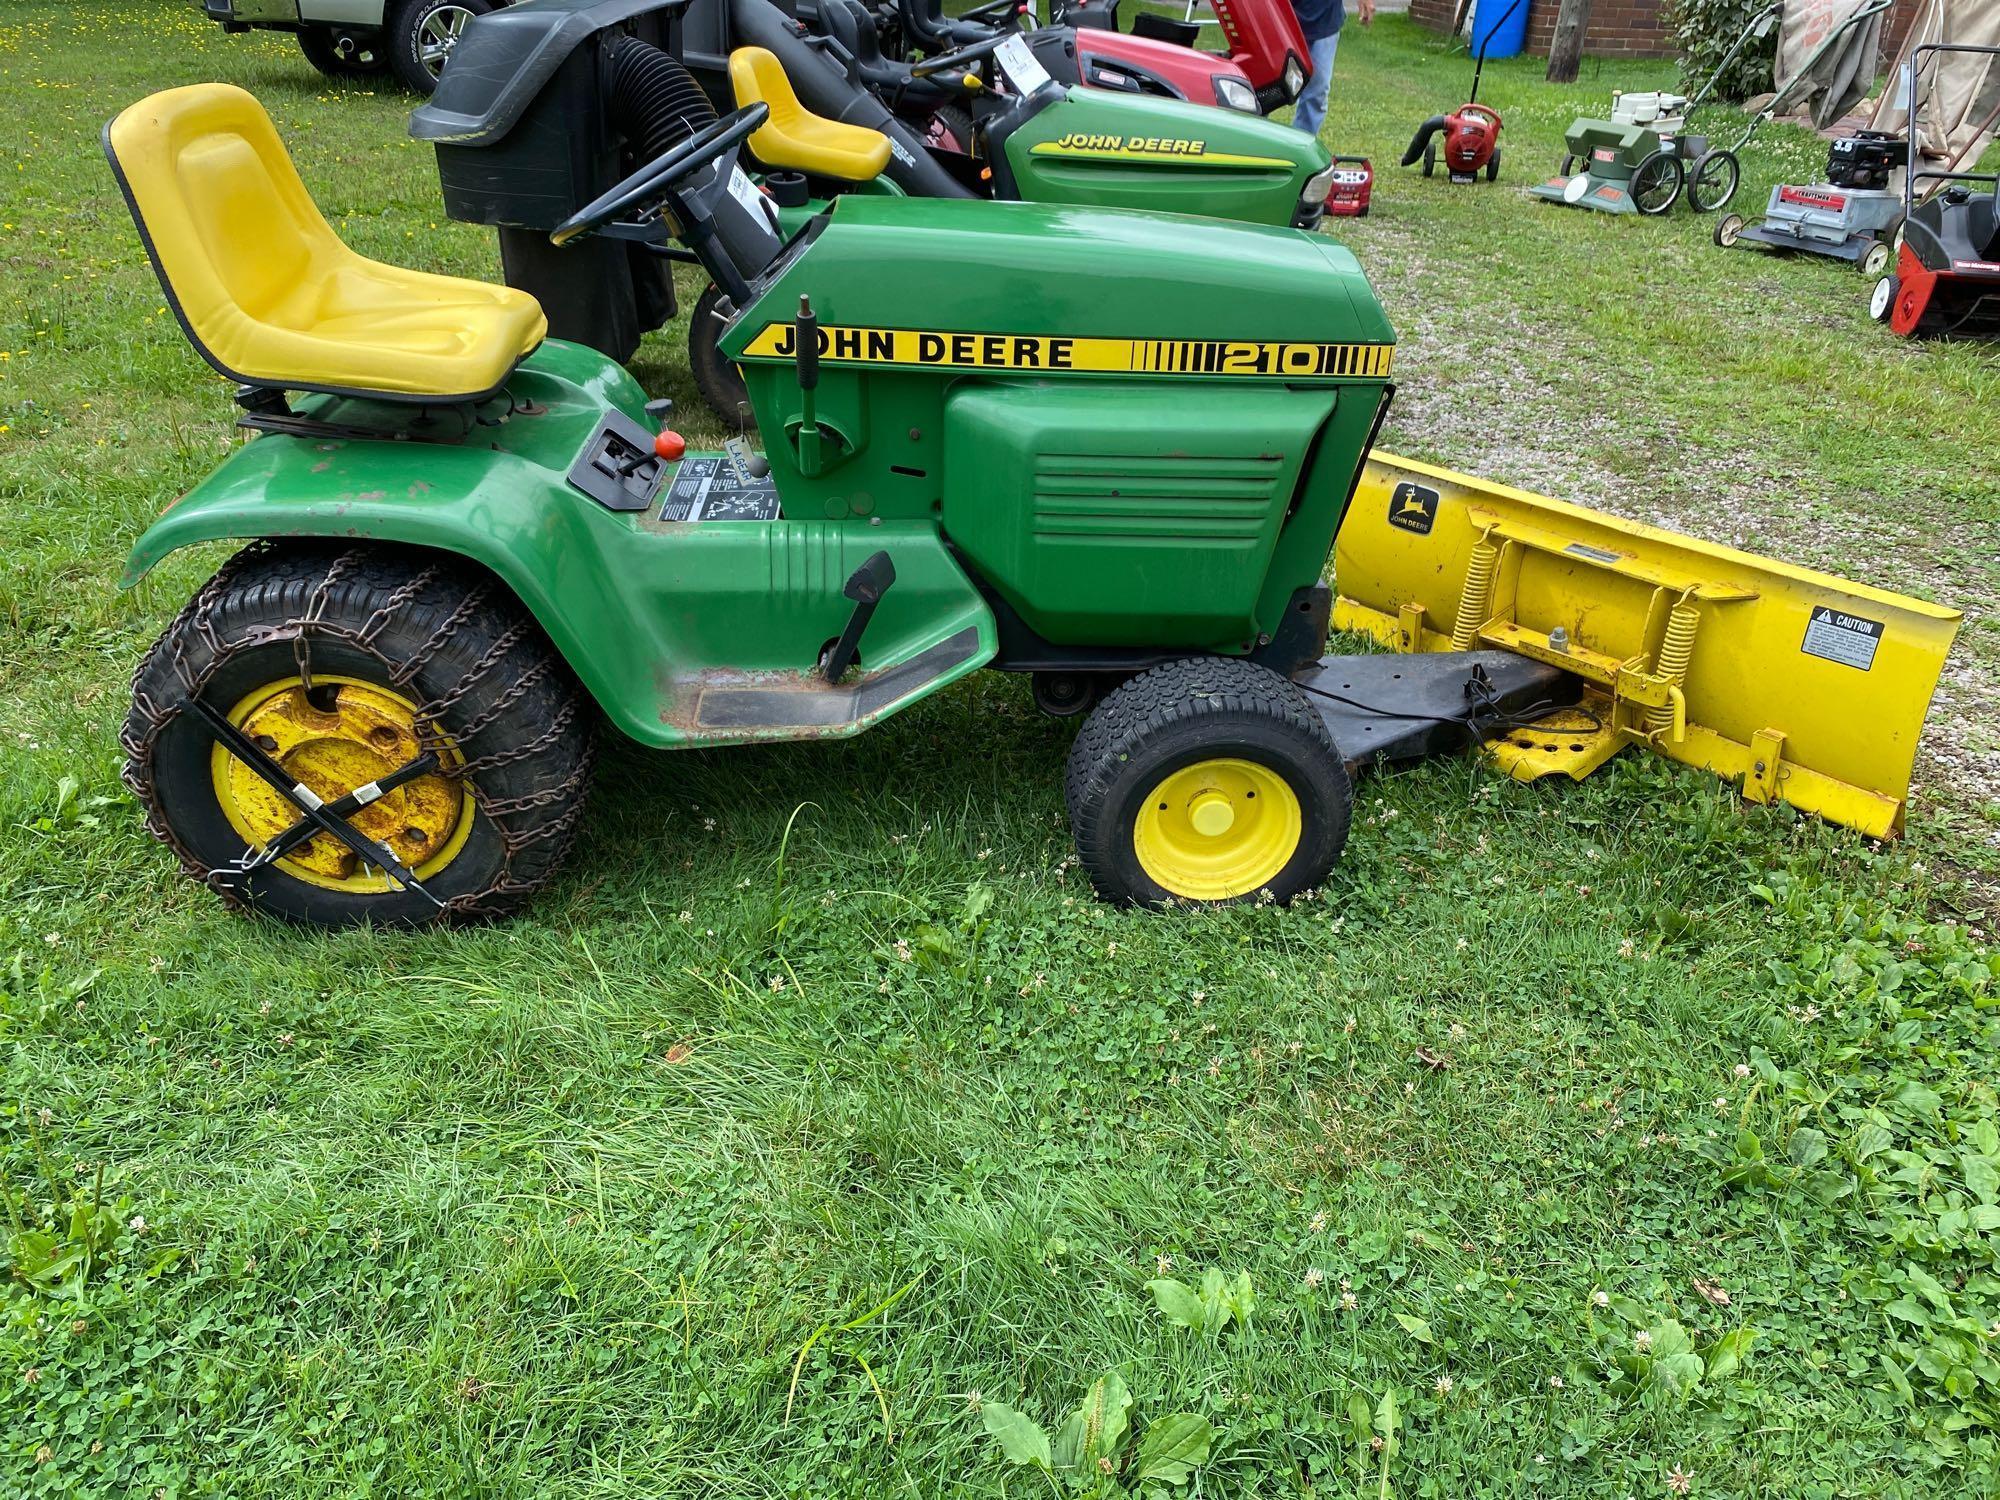 John Deere 210 Garden Tractor with snow blade, wheel weights, tire chains